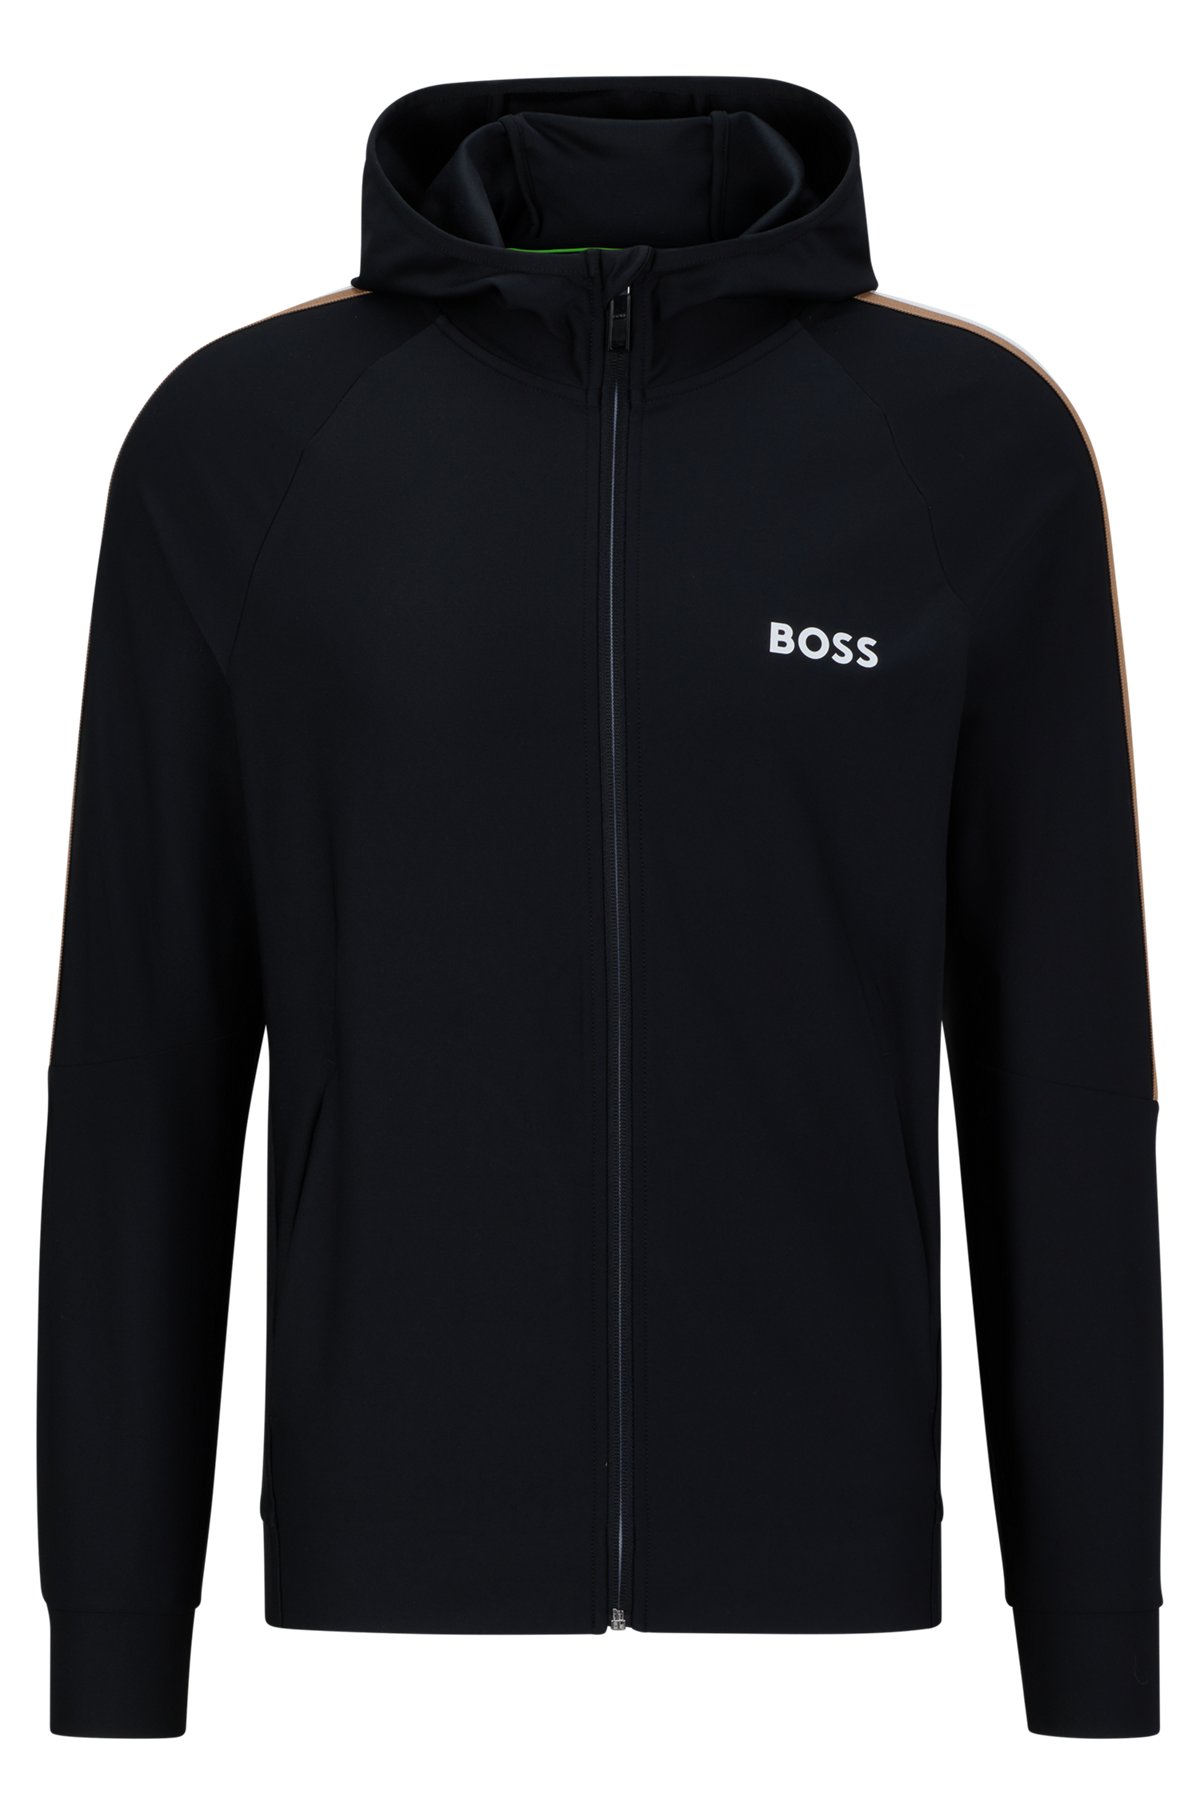 BOSS - BOSS x Matteo Berrettini hoodie with logo and stripes